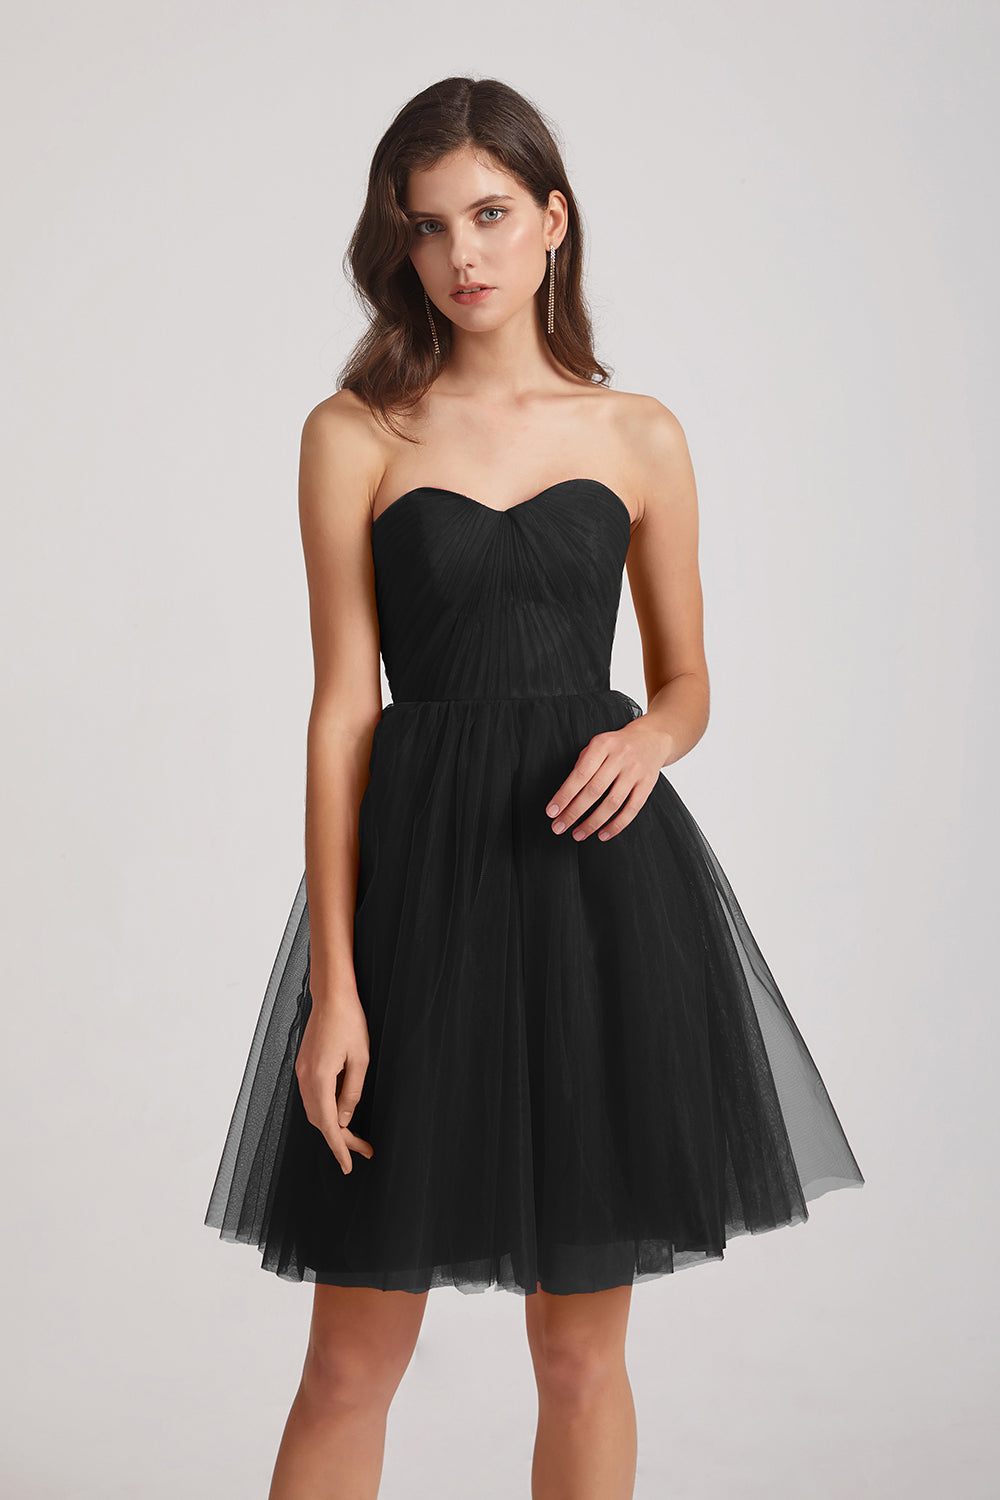 black tulle short bridesmaid dresses